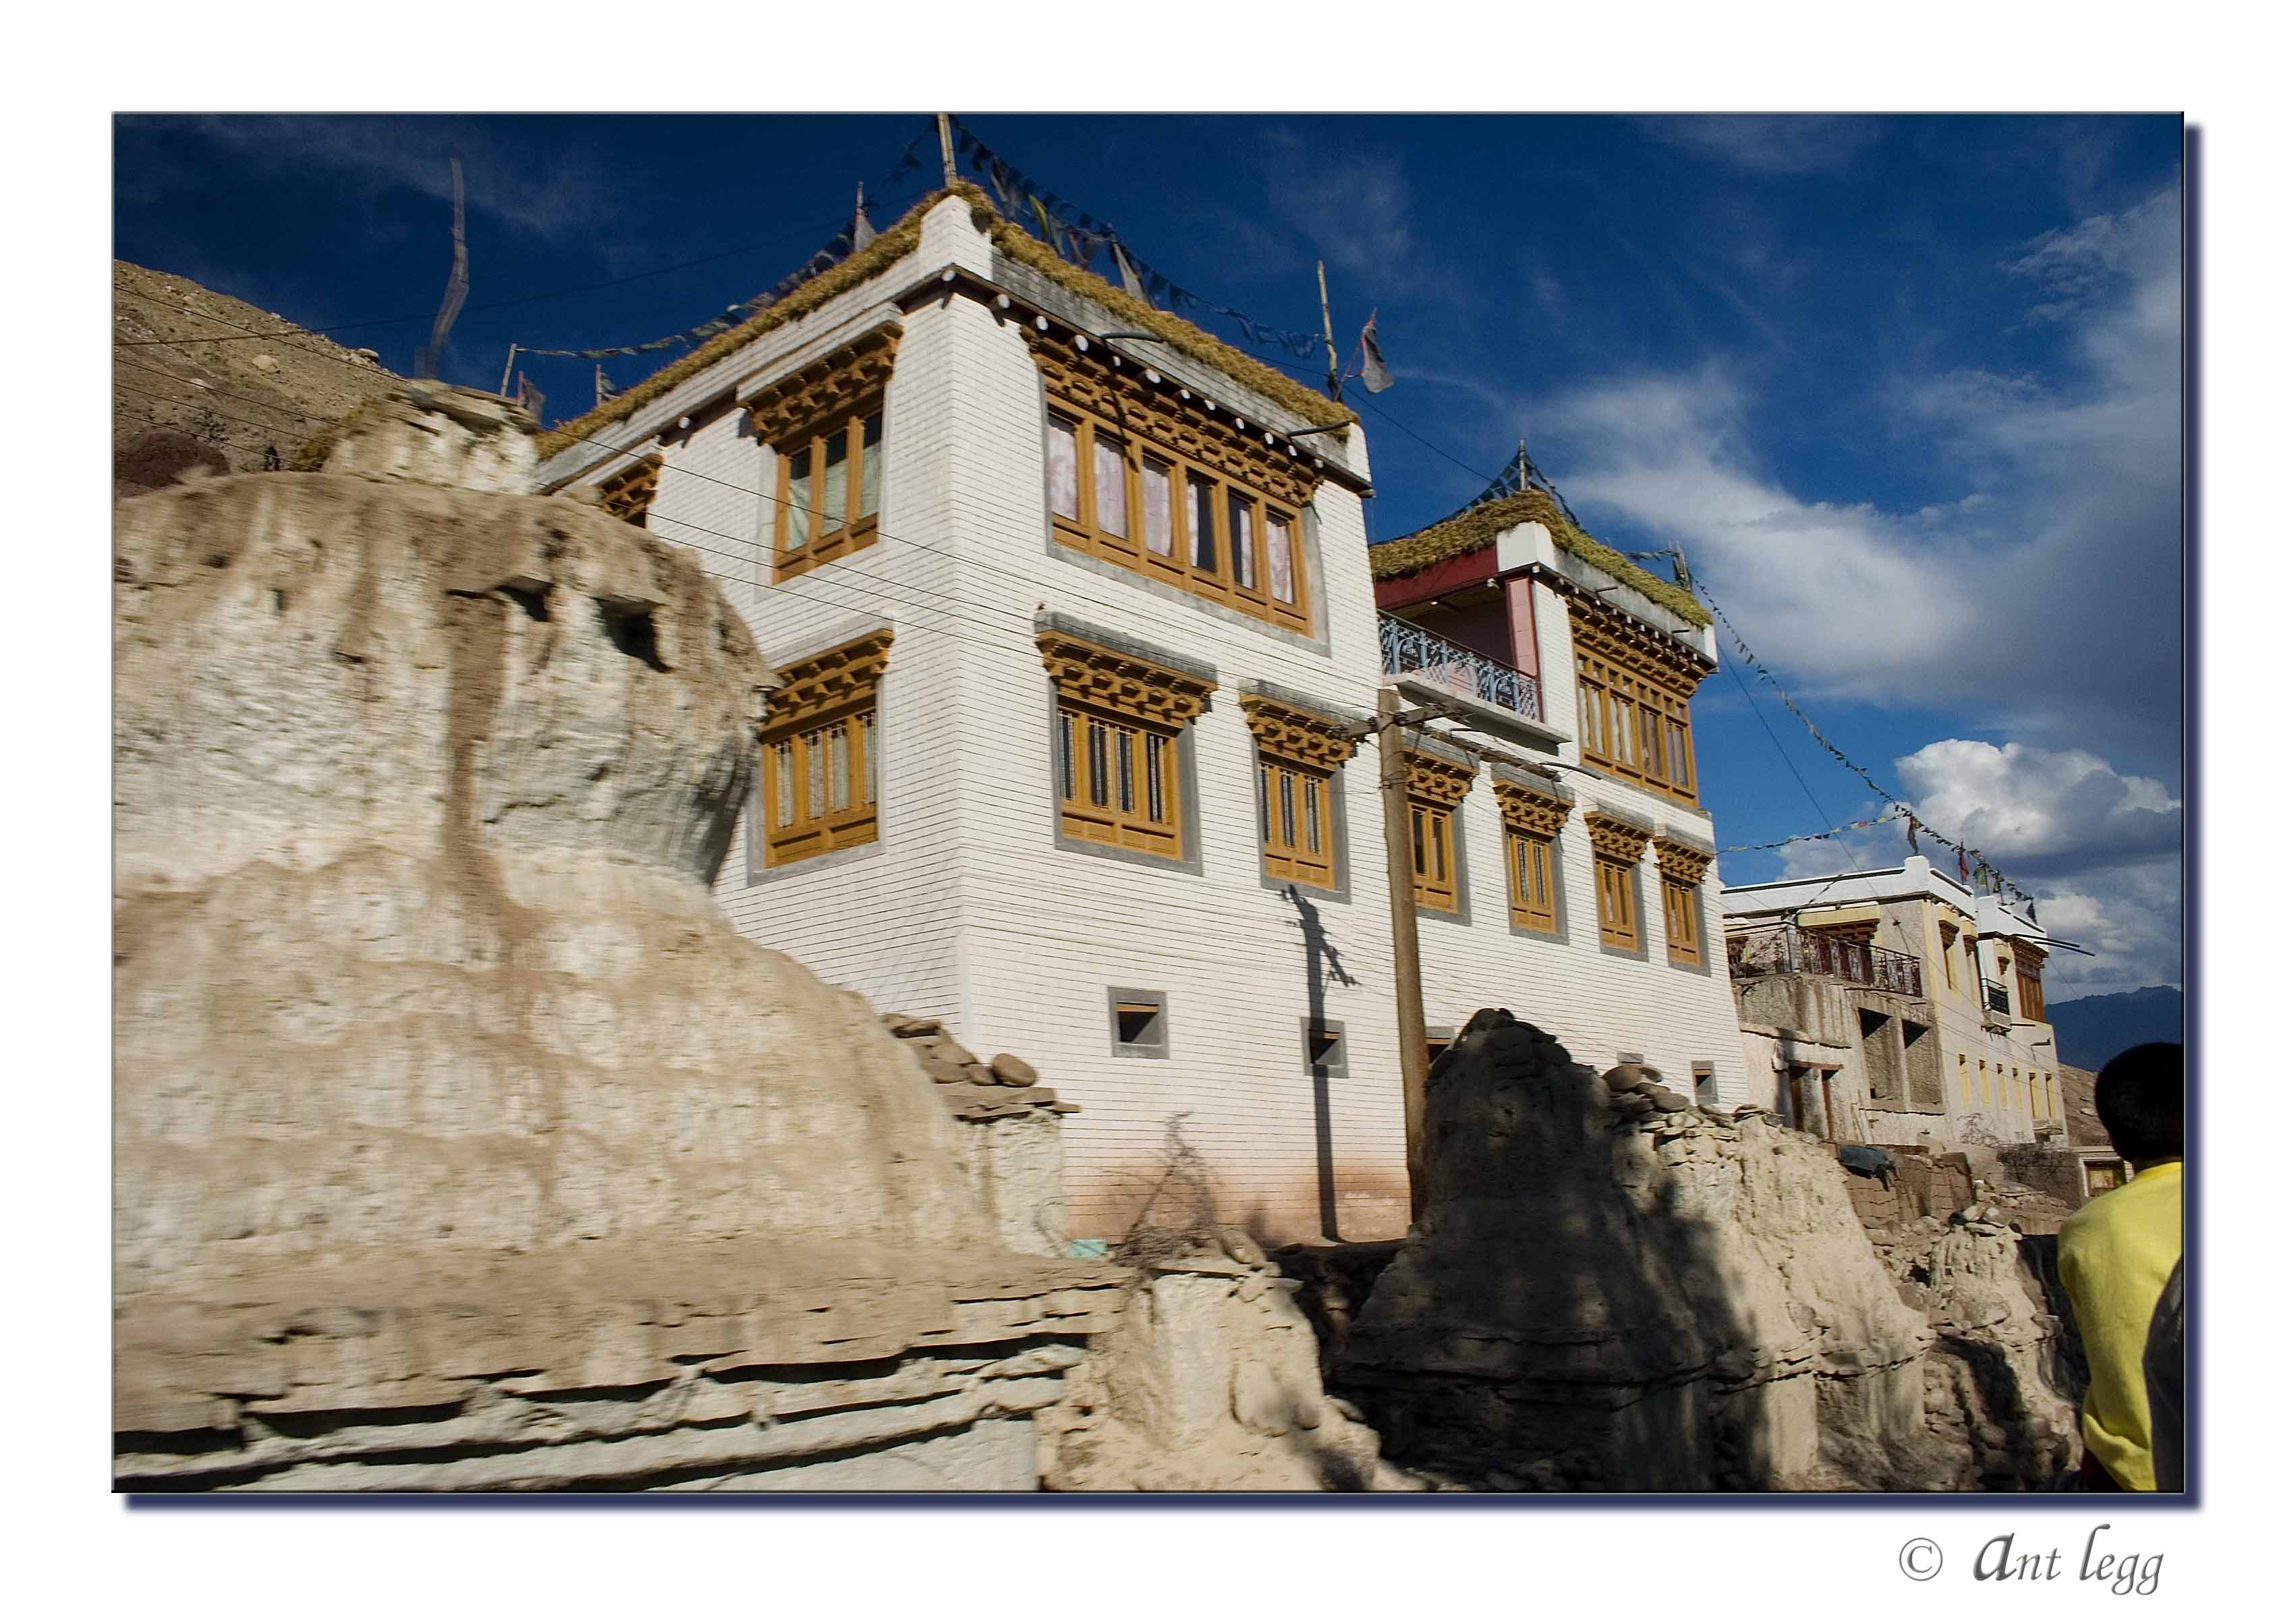 A Ladakhi House